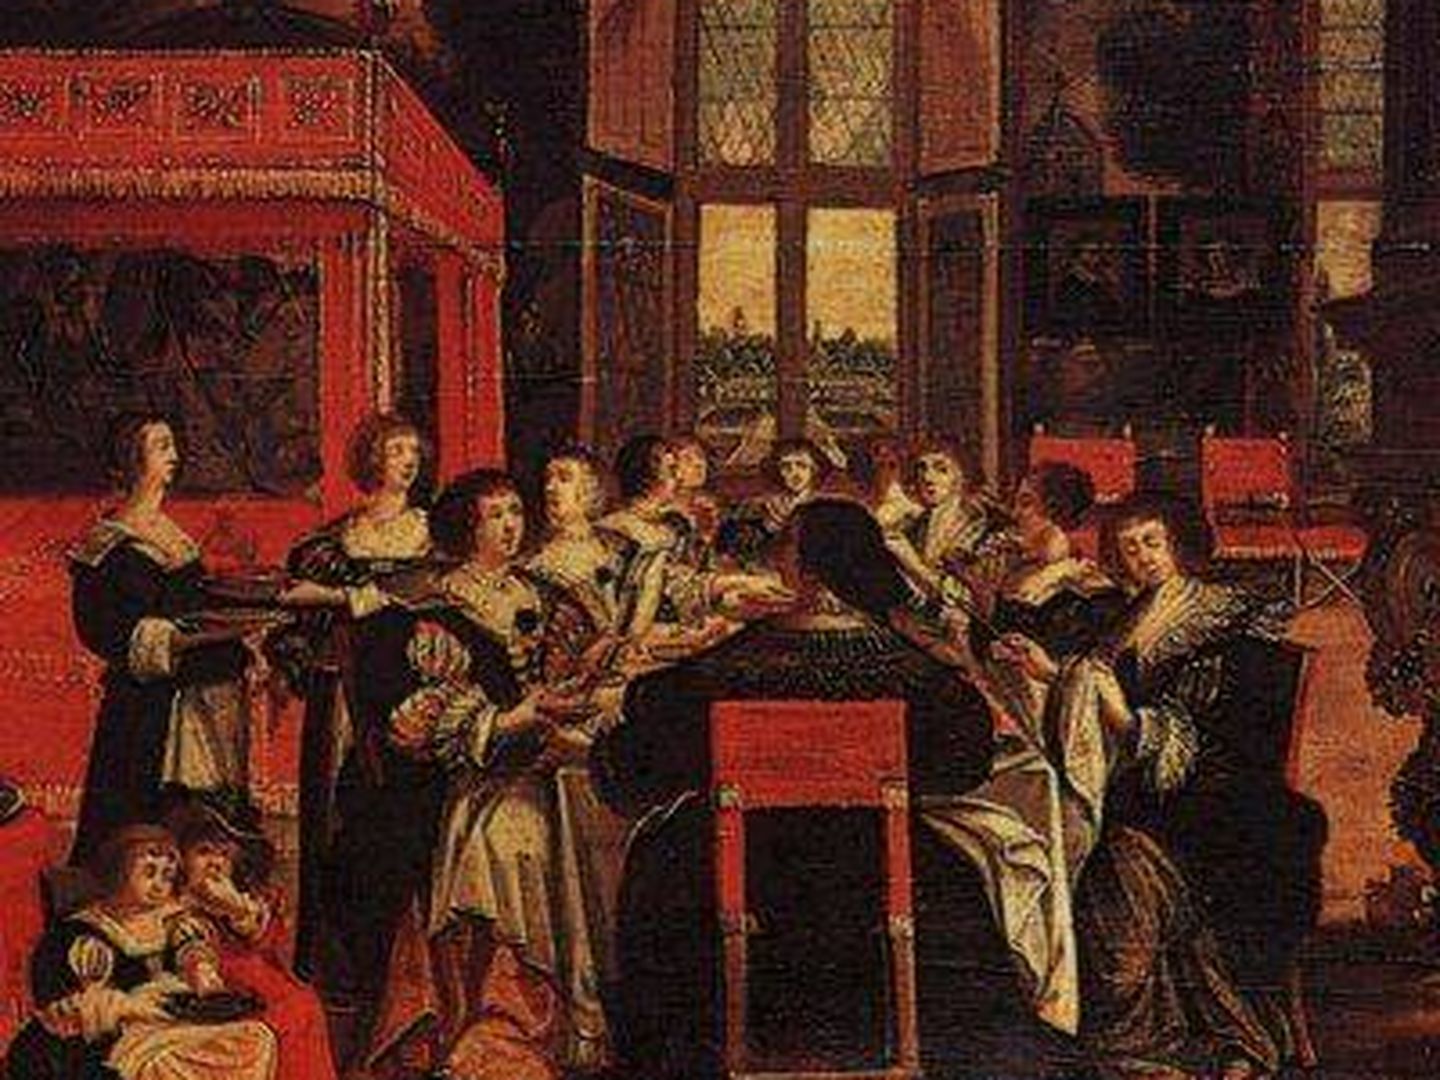 Salón de damas literario, de Abraham Bosse. (Wikipedia)